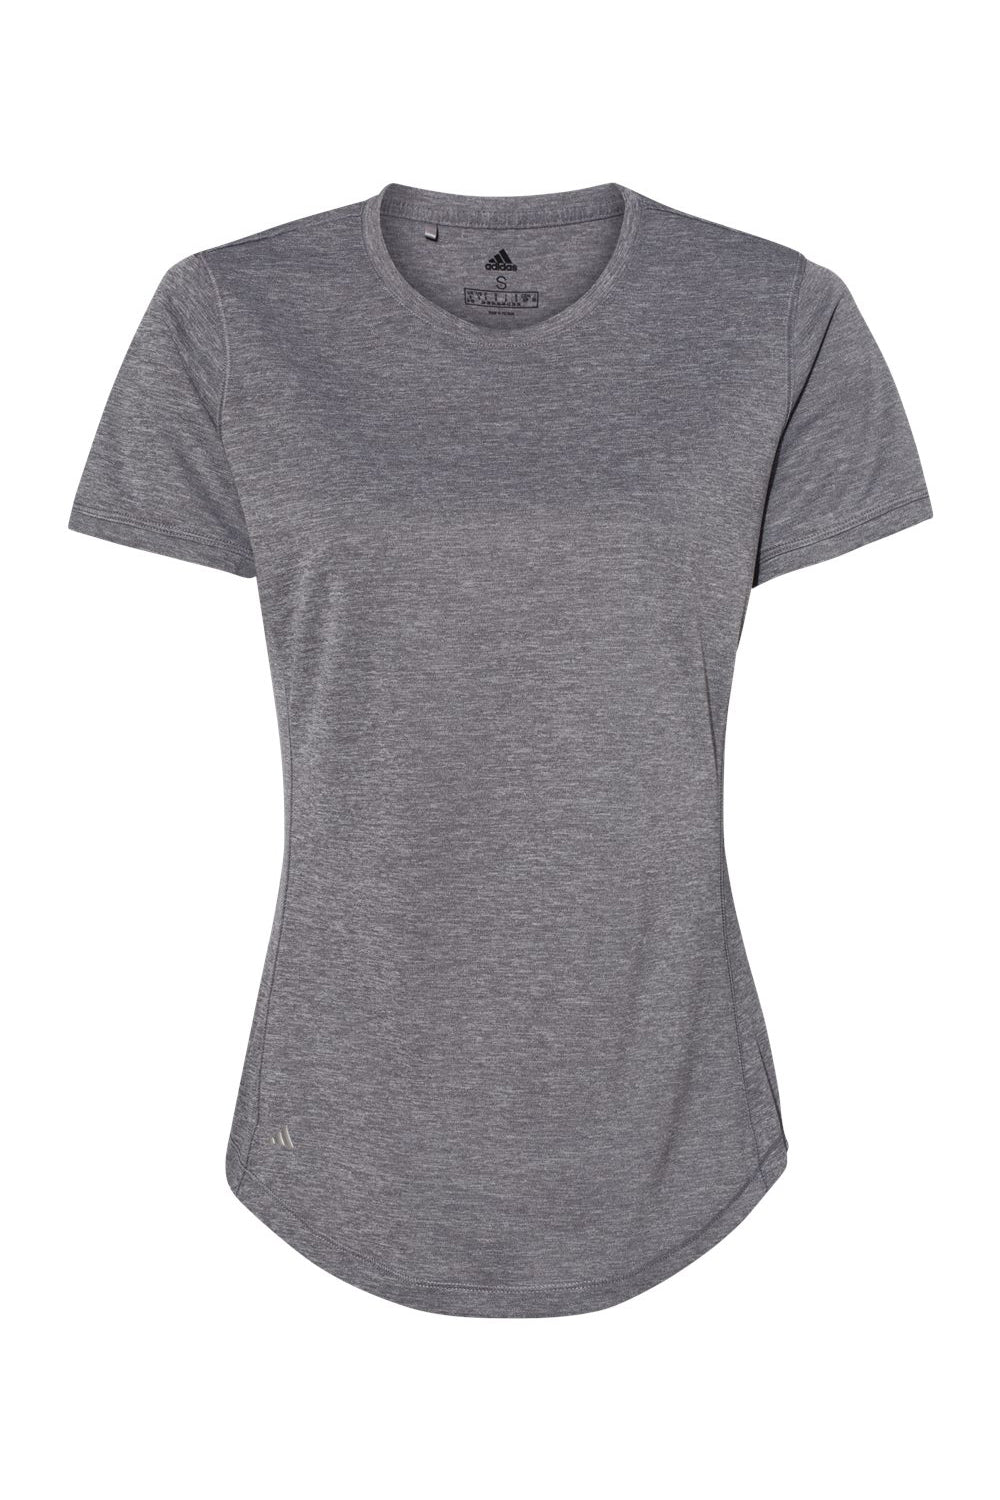 Adidas A377 Womens Short Sleeve Crewneck T-Shirt Heather Black Flat Front